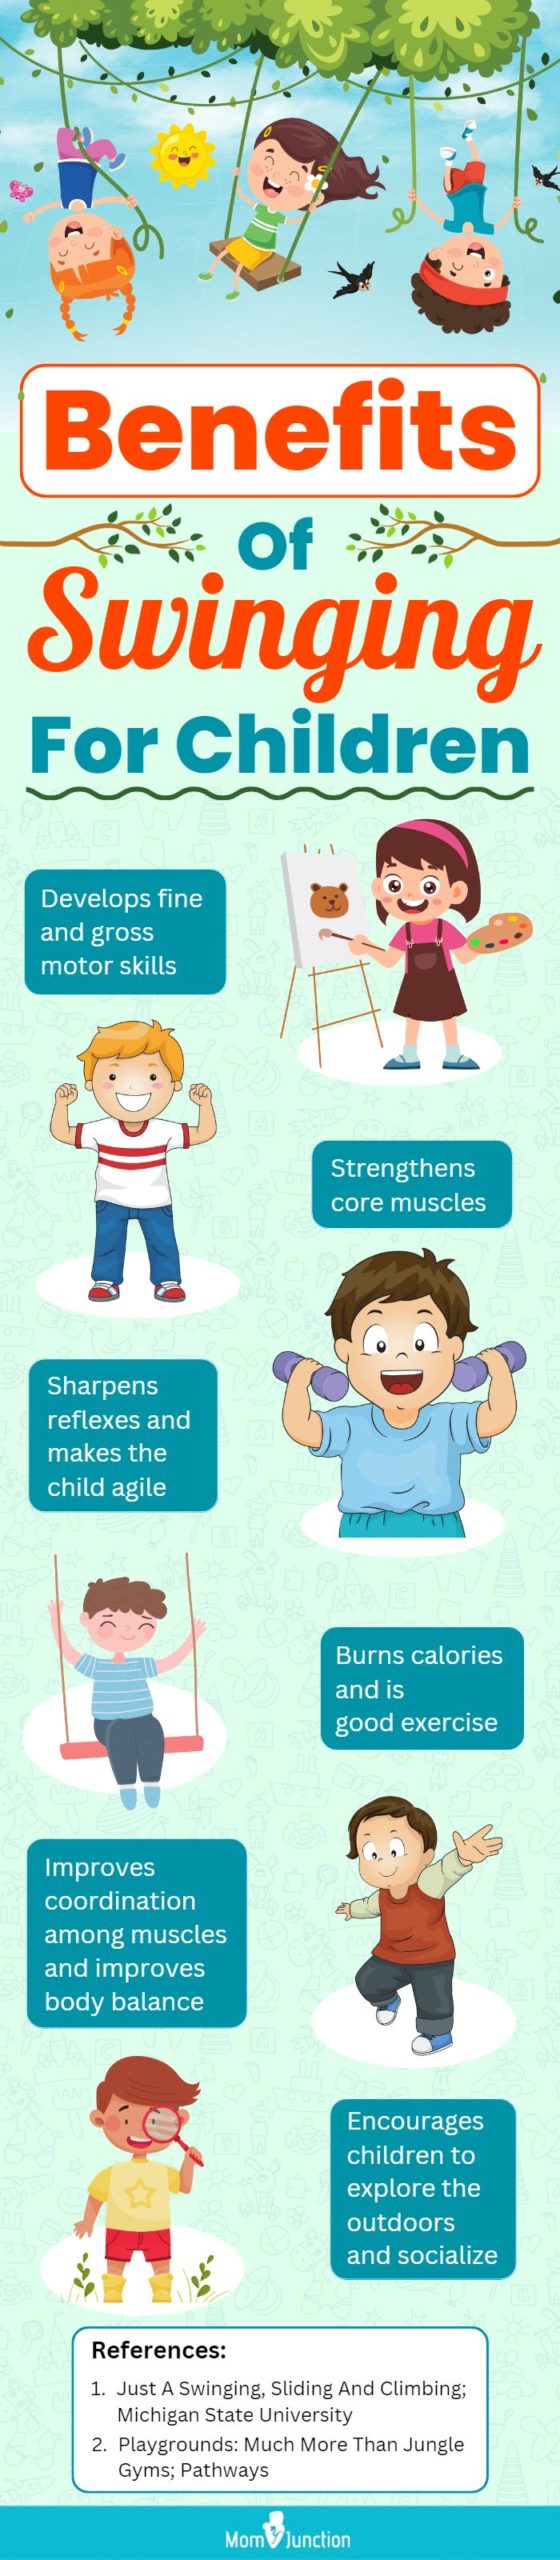 Benefits Of Swinging For Children (infographic)